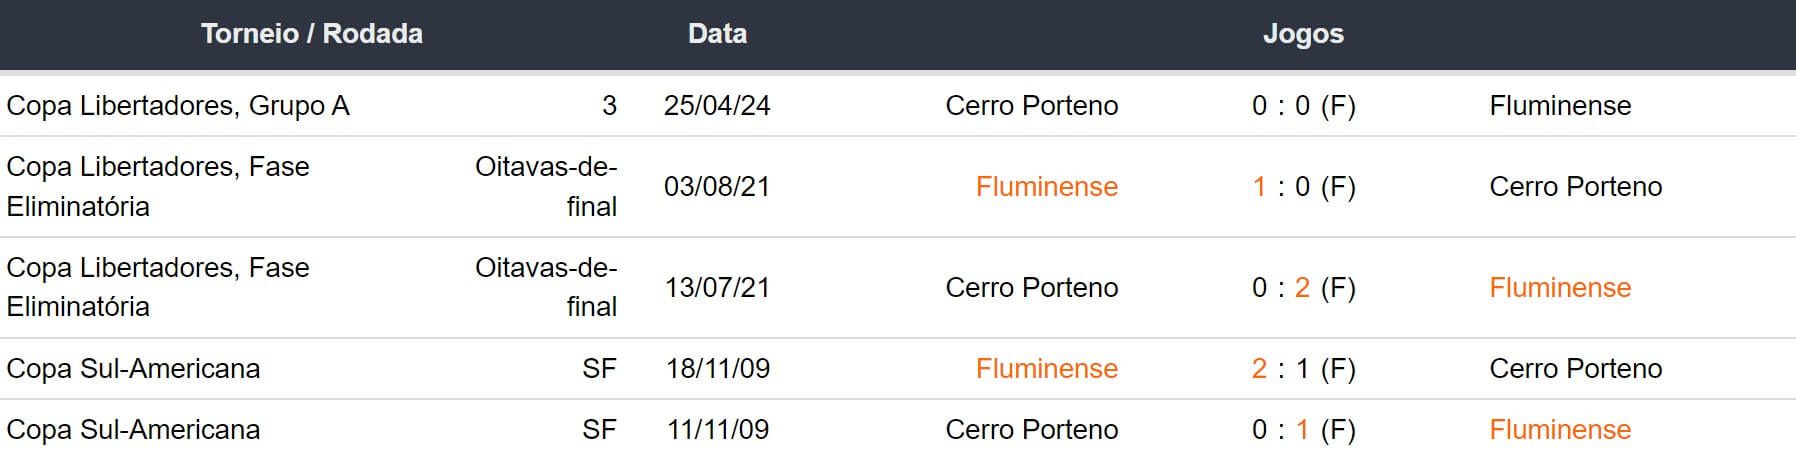 Ultimos 5 encontros Fluminense x Cerro Porteno